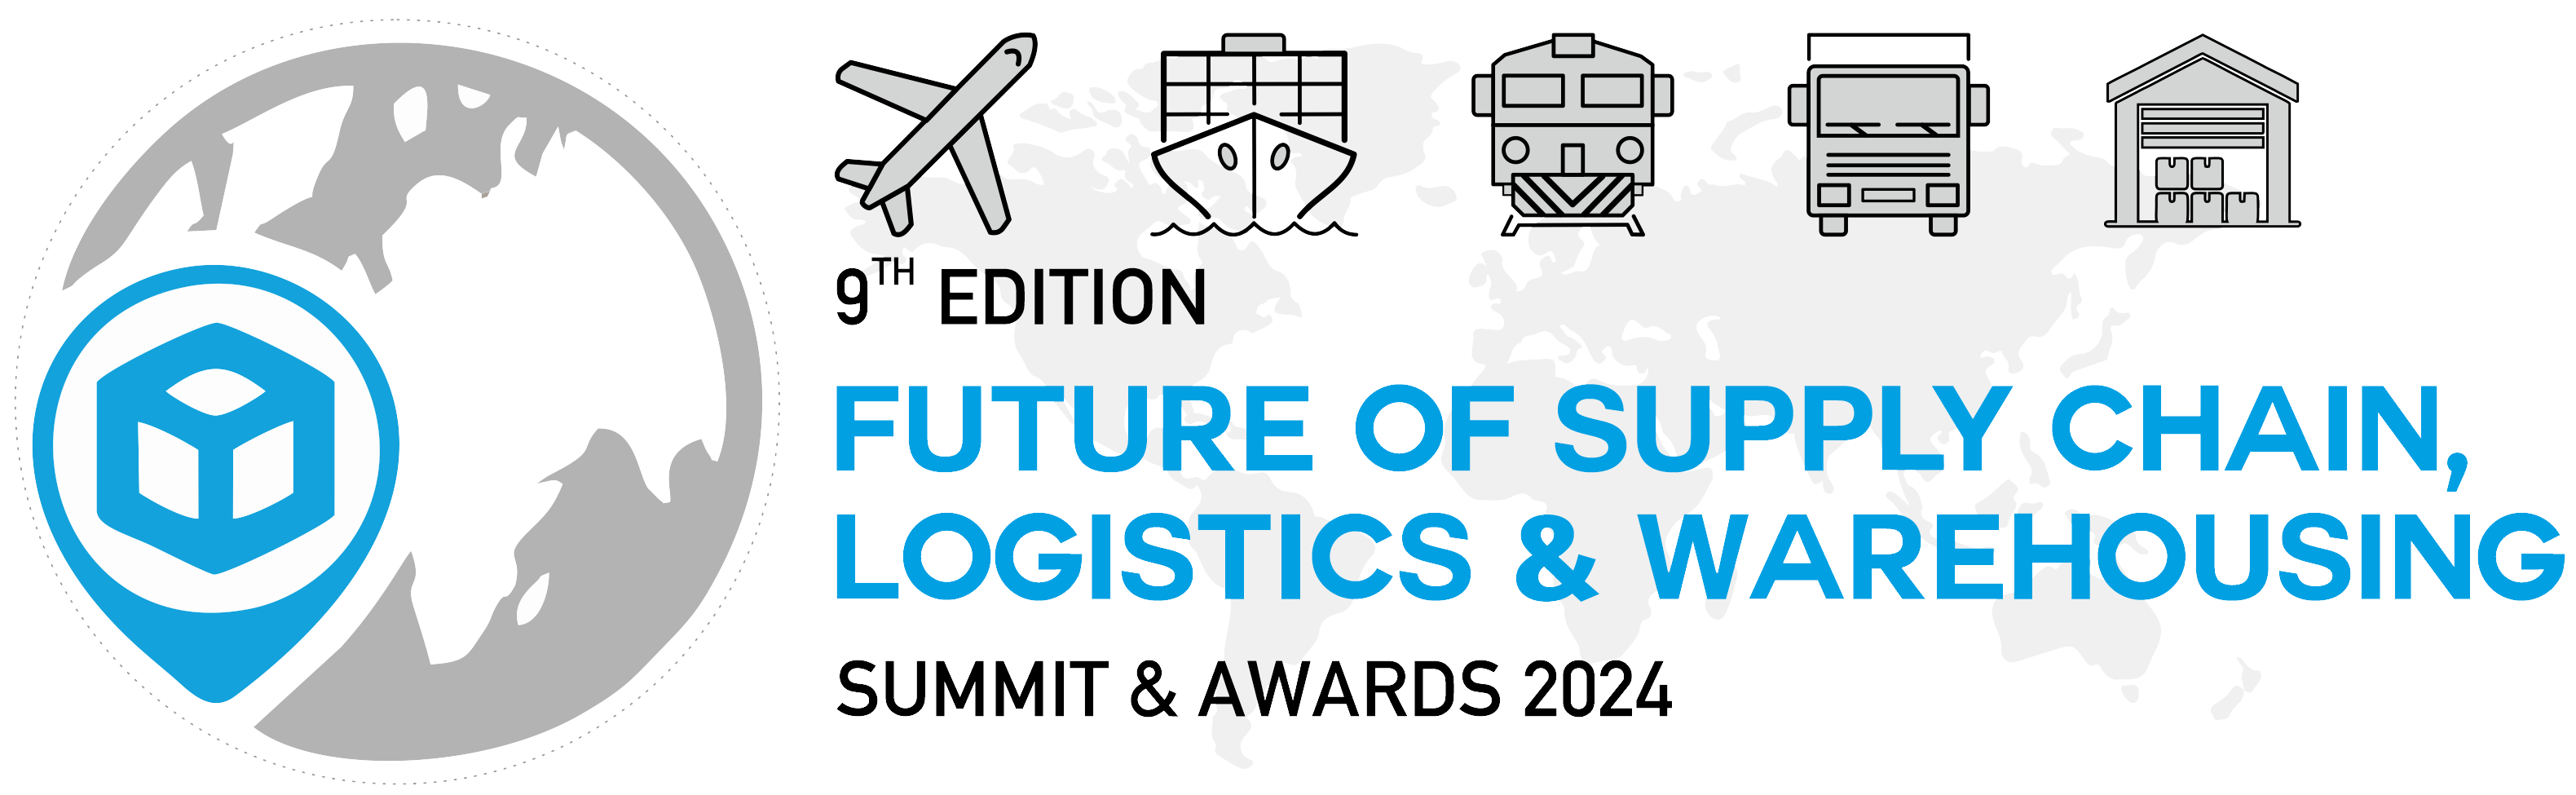 9th Edition Future of Logistics & Supply Chain Summit & Awards  2024